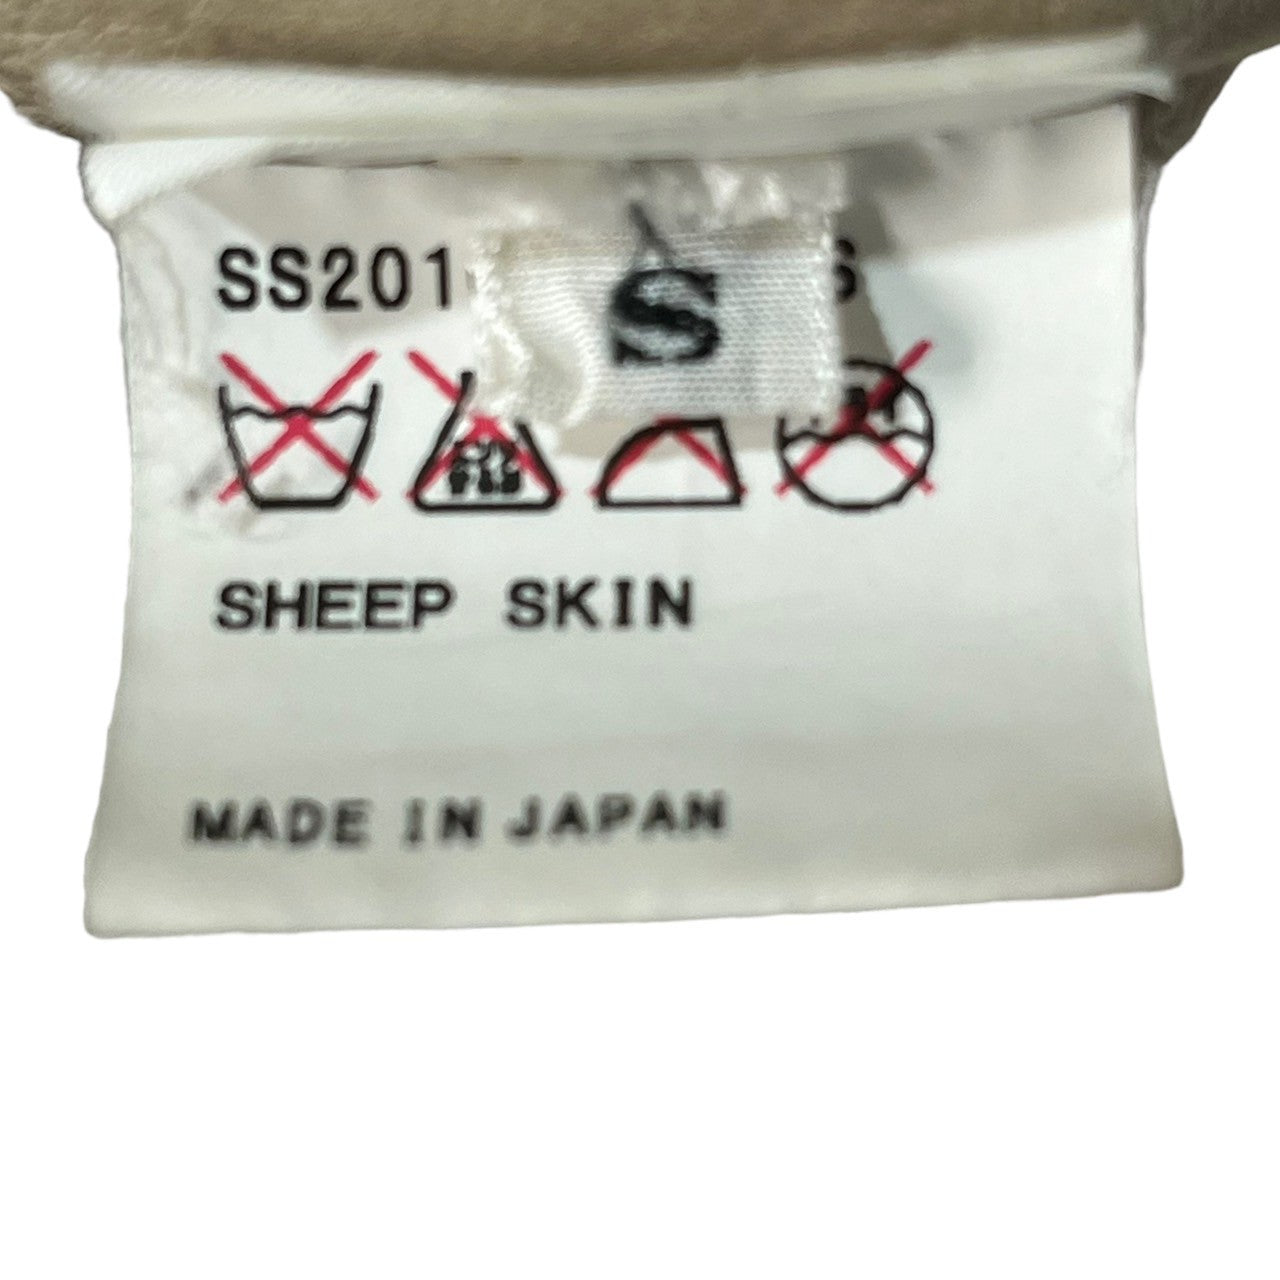 SEVEN BY SEVEN(セブンバイセブン) 16SS Vareuse type sheep skin pullover ヴァルーズタイプ シープスキン プルオーバー シャツ SS2016-7X7LTS SIZE S ベージュ